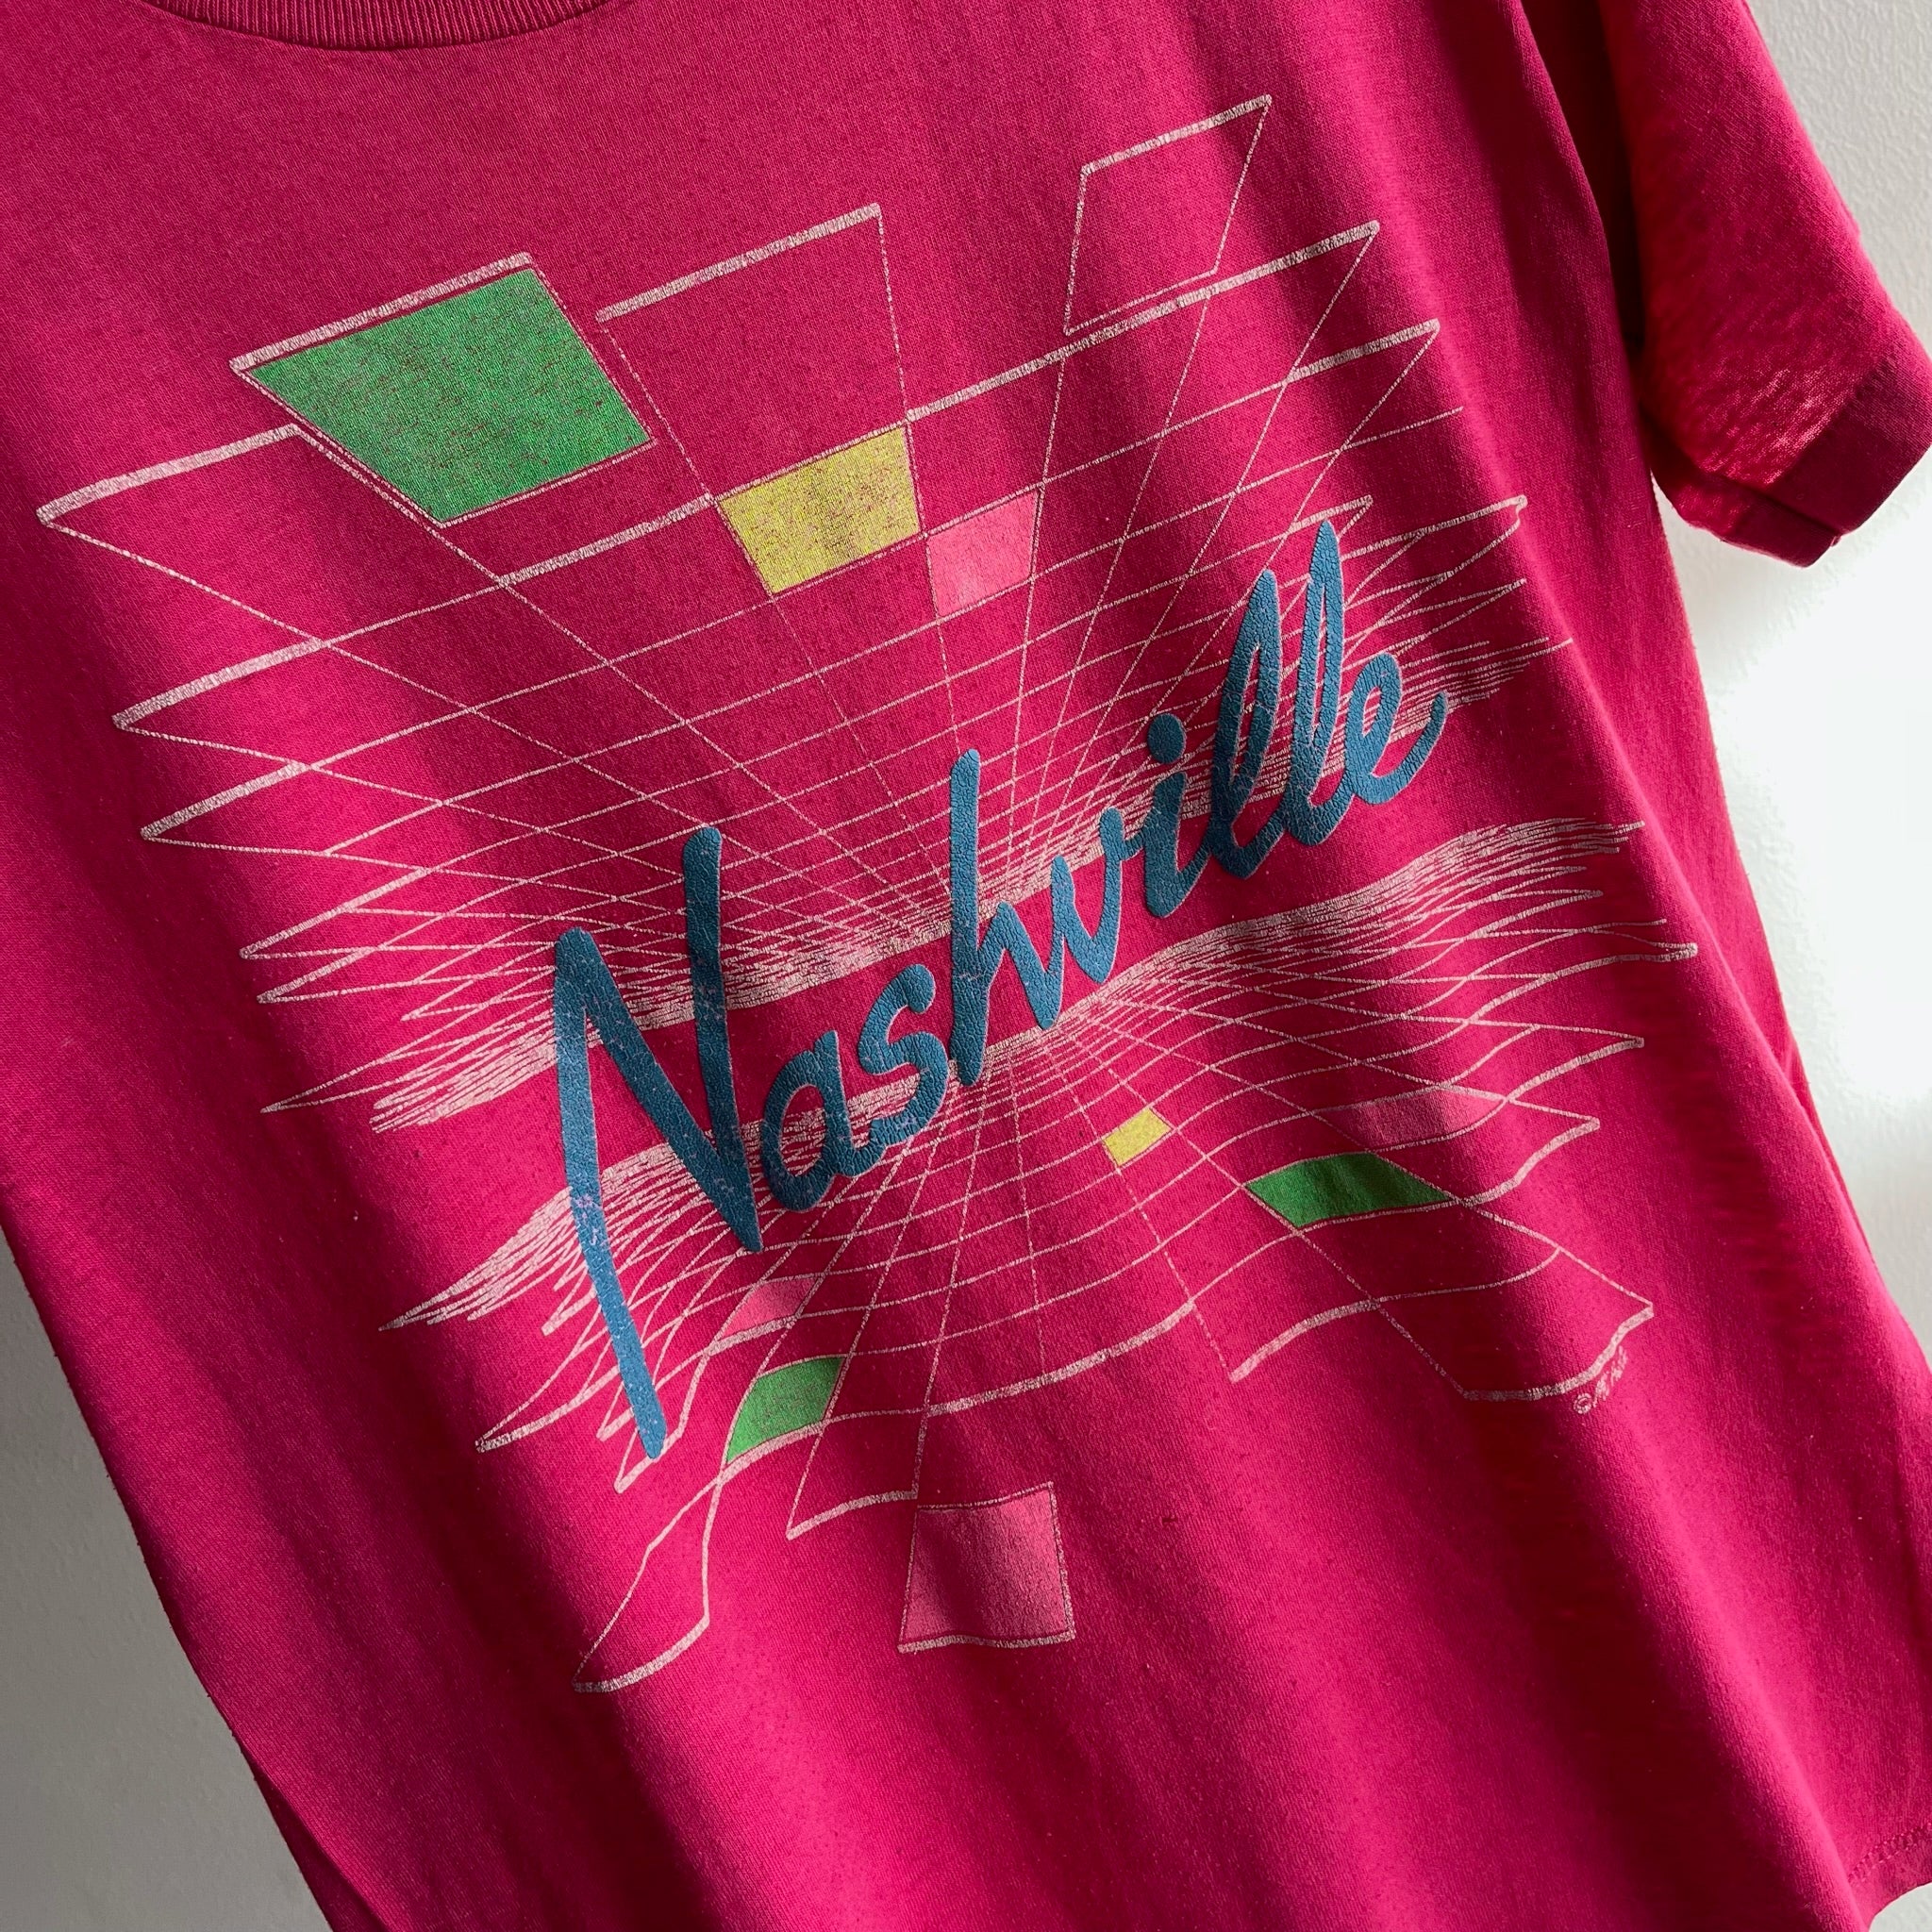 1980s Nashville Tourist T-Shirt - Super Thin and Worn